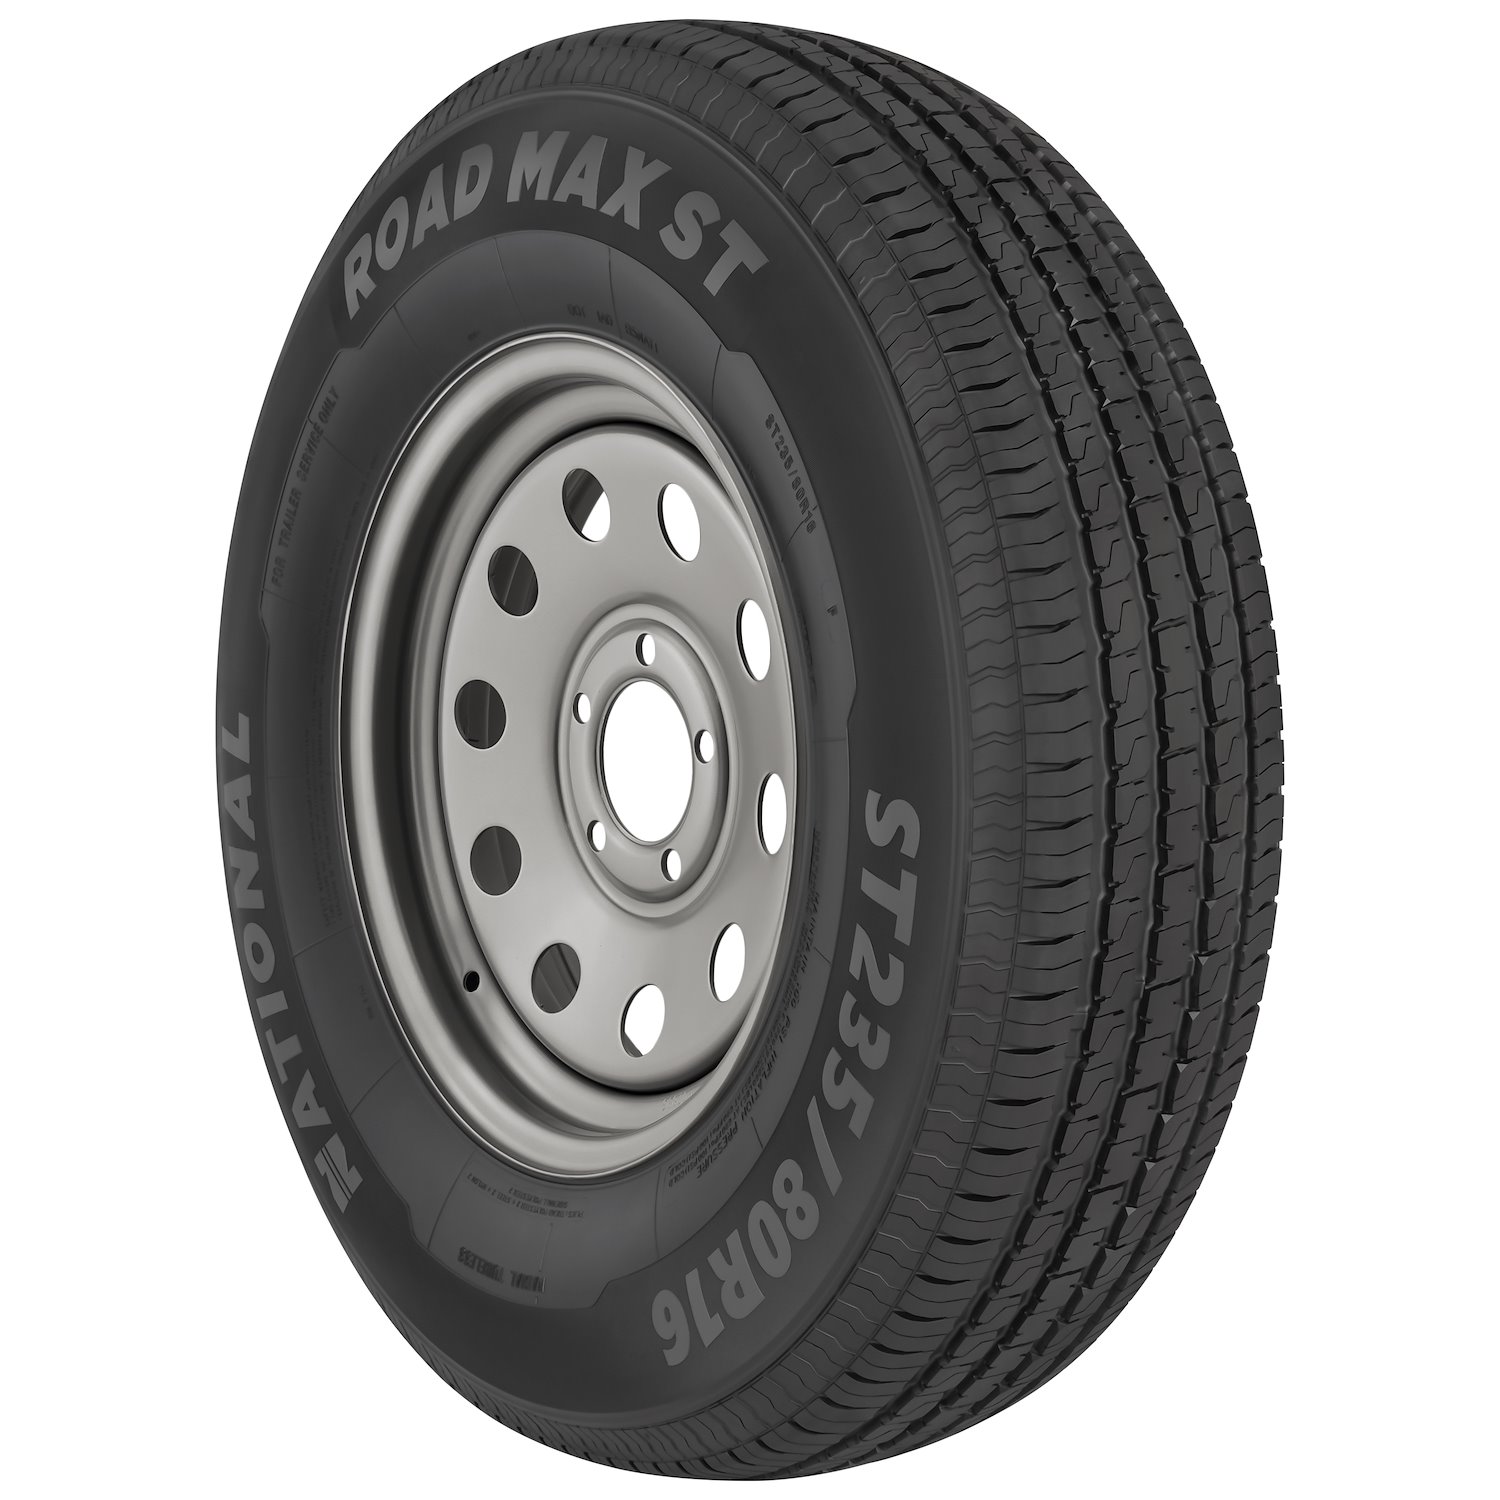 NRM17 Road MAX ST Tire, ST235/85R16